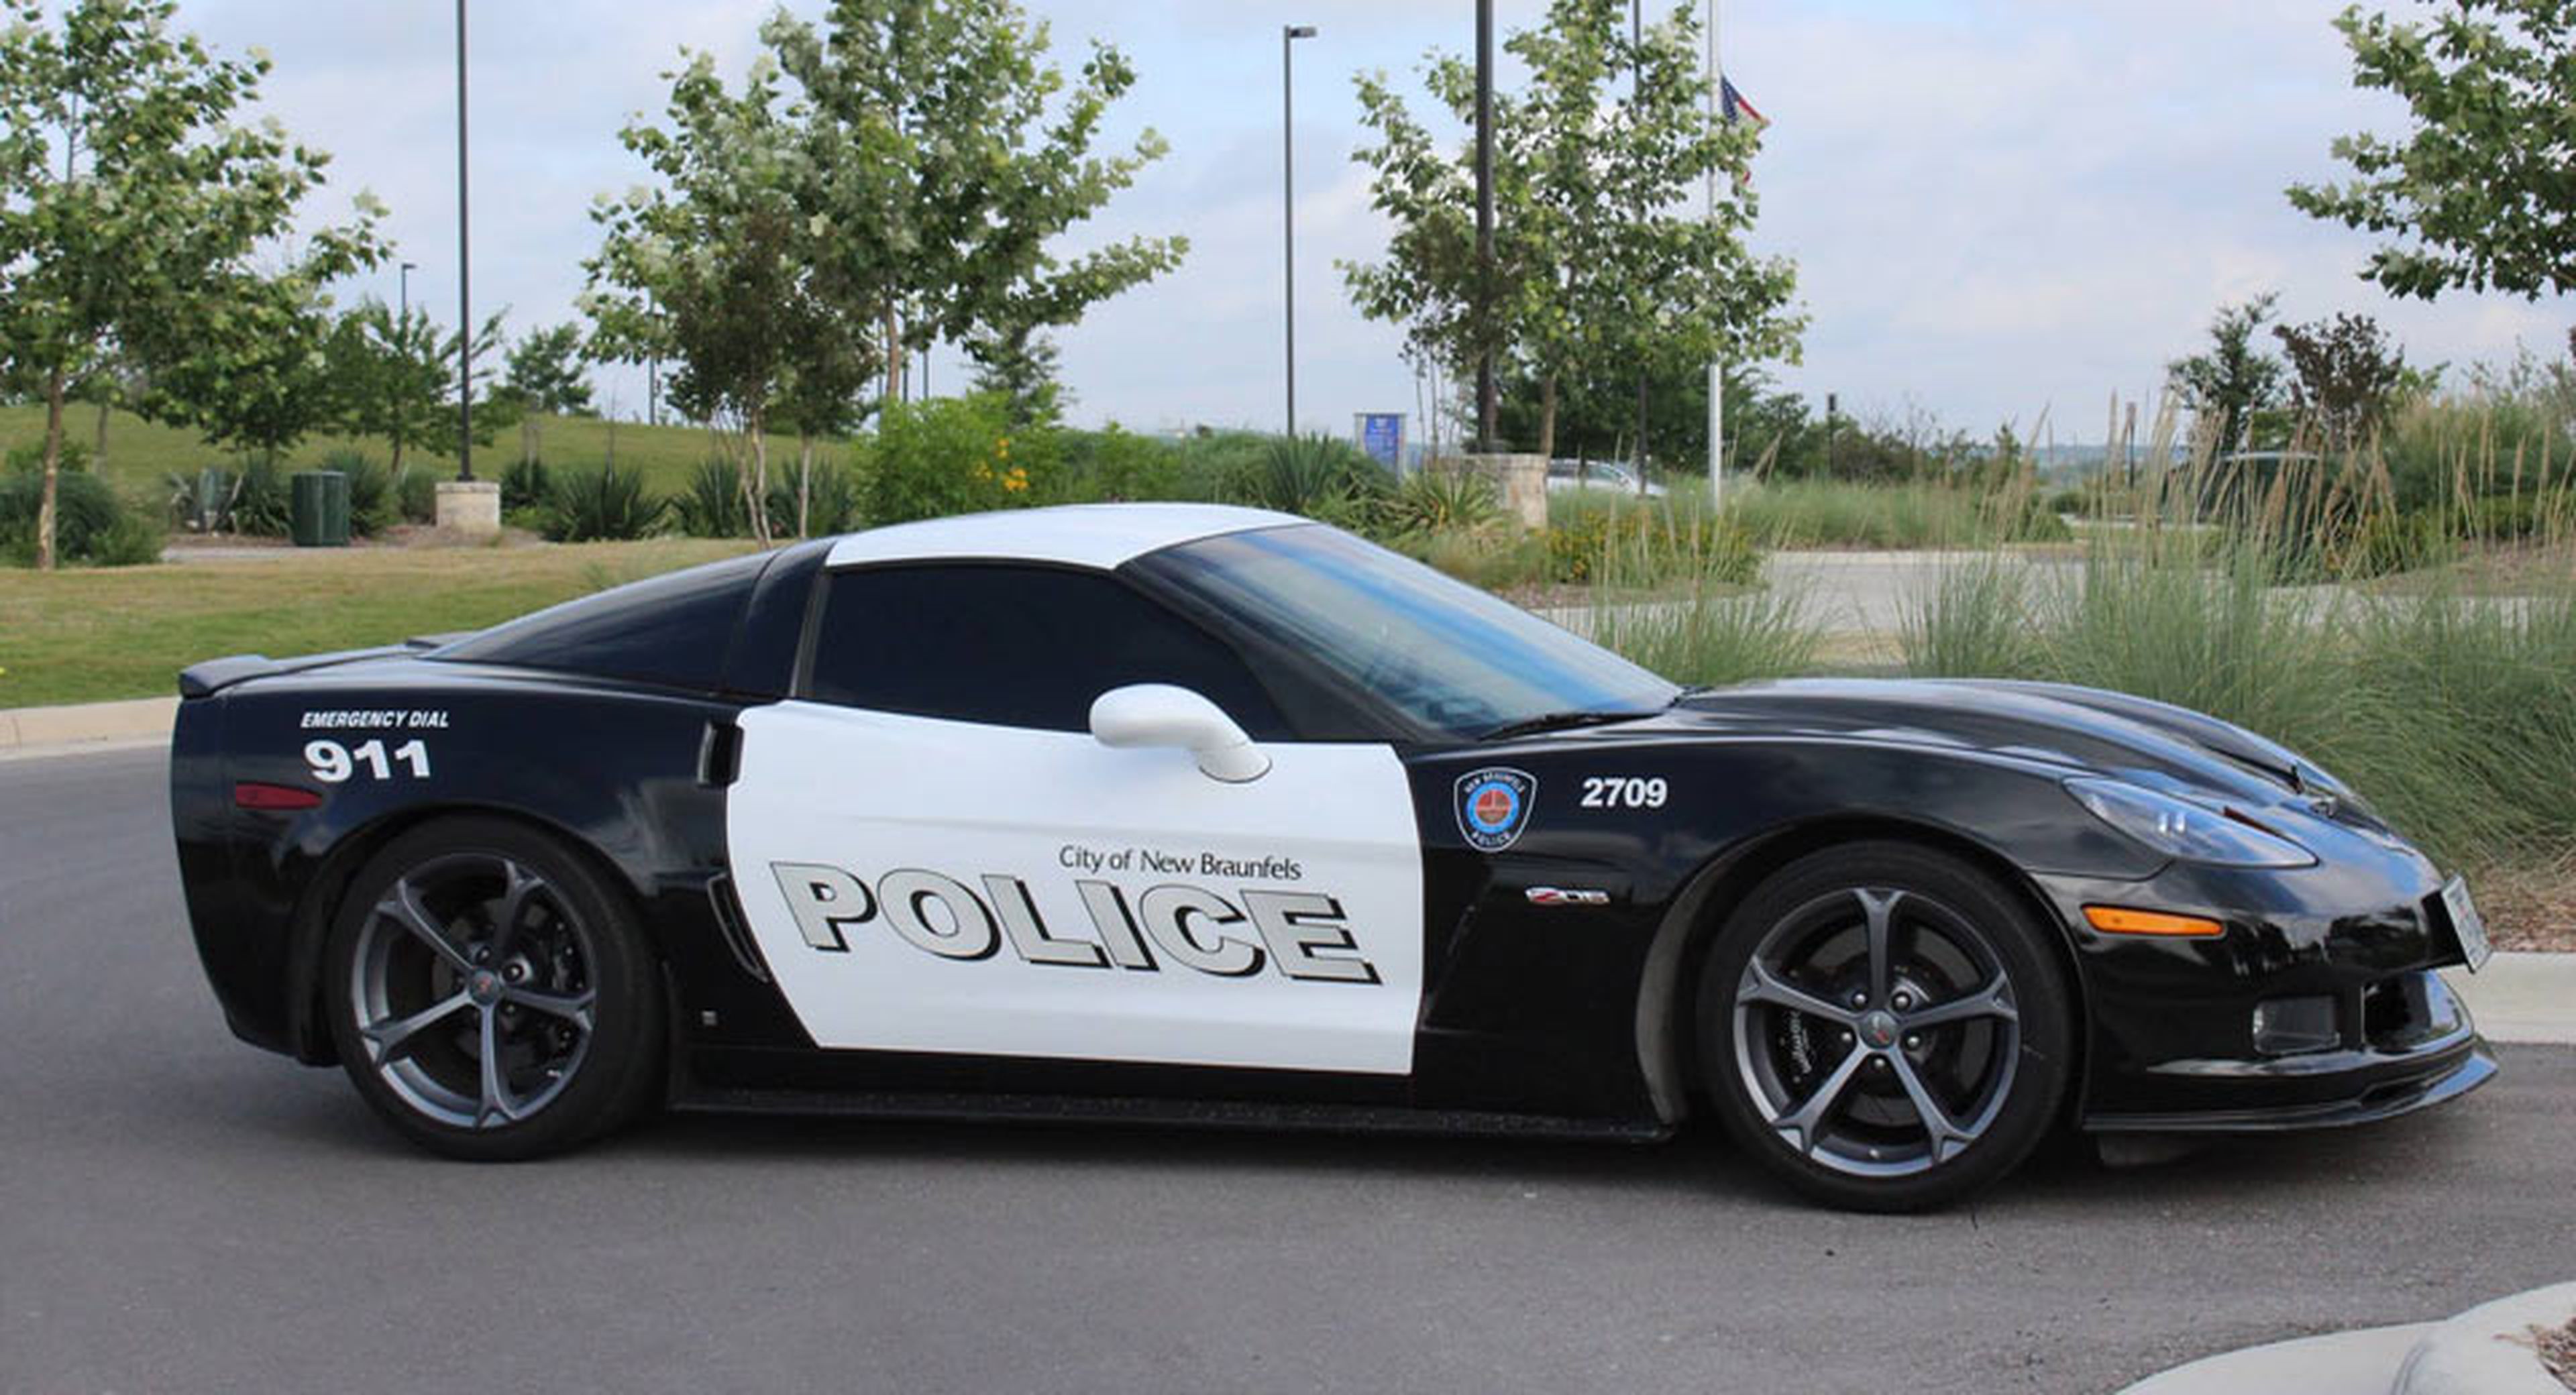 Coptimus Prime, el nuevo coche patrulla de la poli tejana